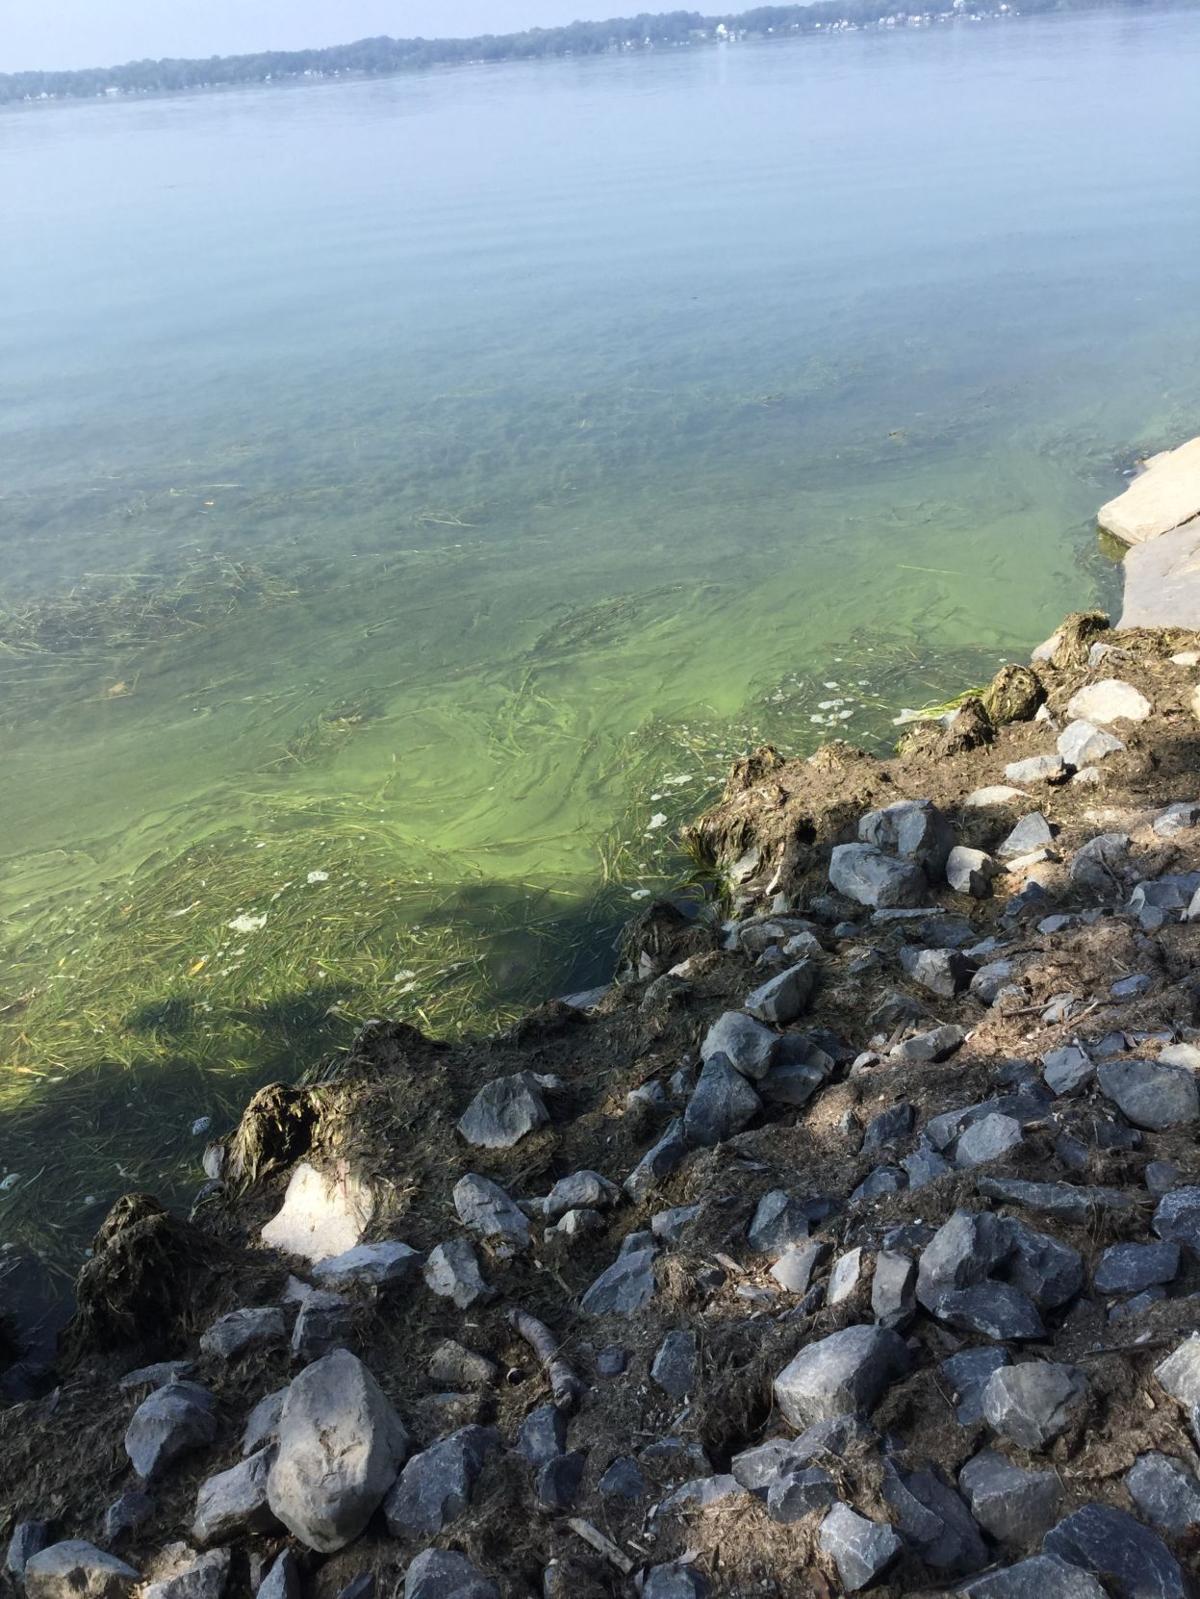 Sample results show Cayuga Lake harmful algal blooms had high toxin